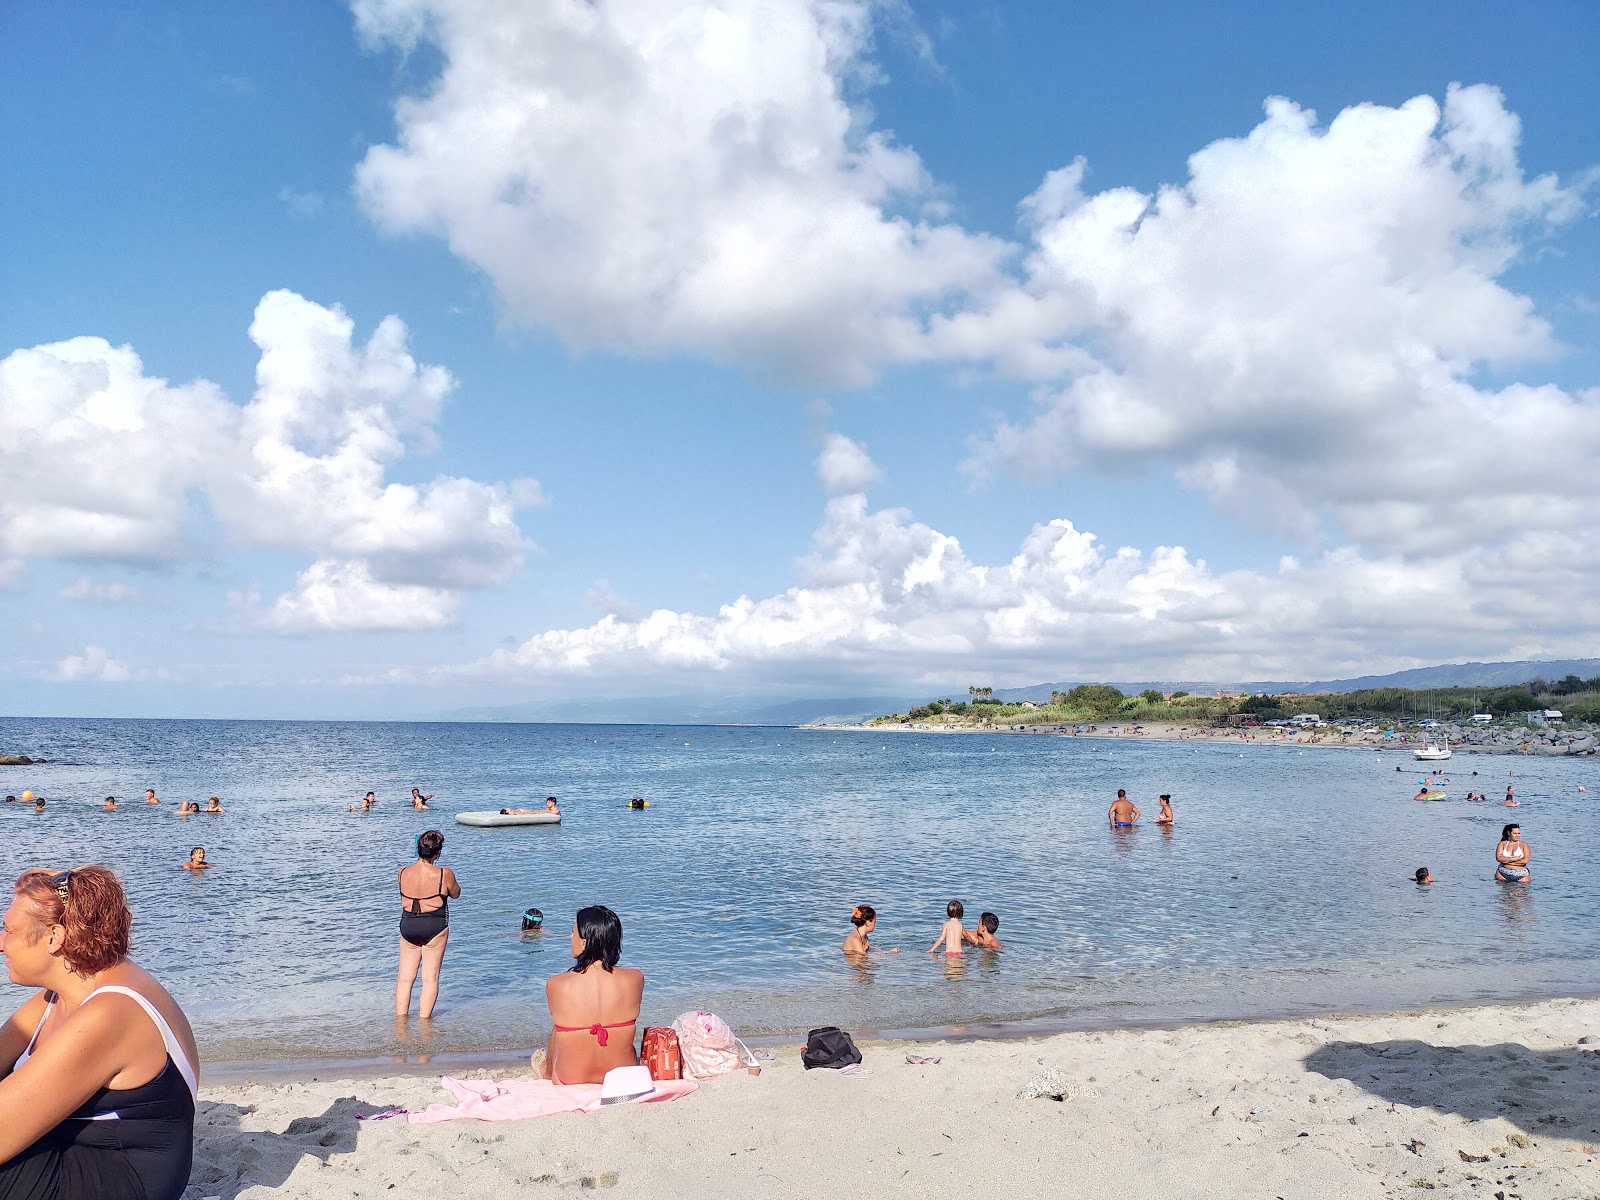 Photo of Spiaggia La Rocchetta with blue water surface